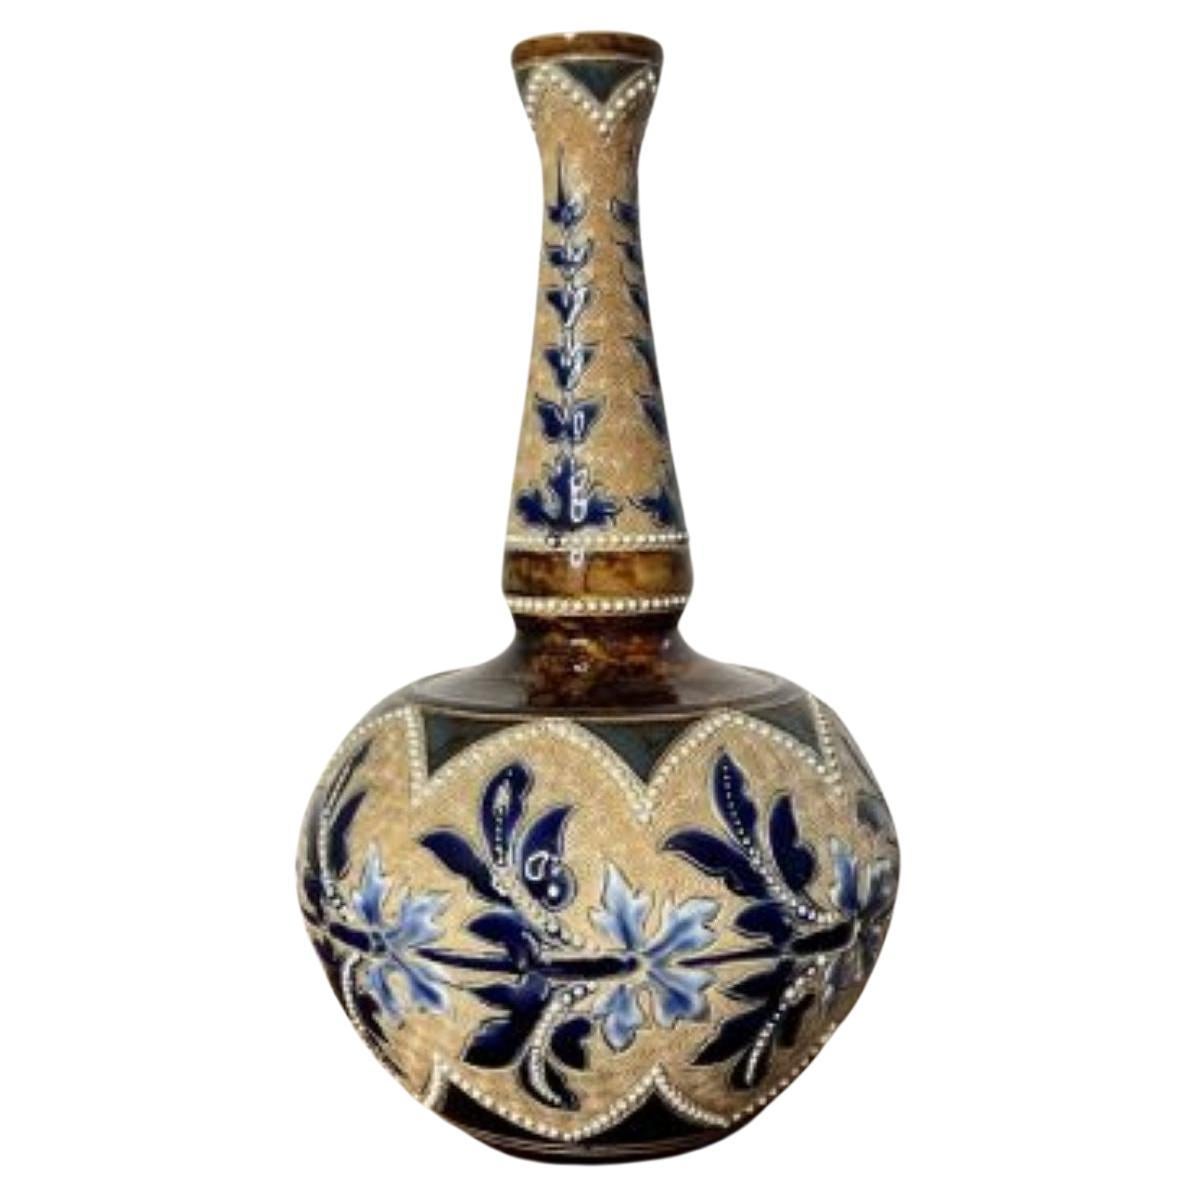 Fantastique vase ancien Doulton Lambeth d'Emily Stormer 